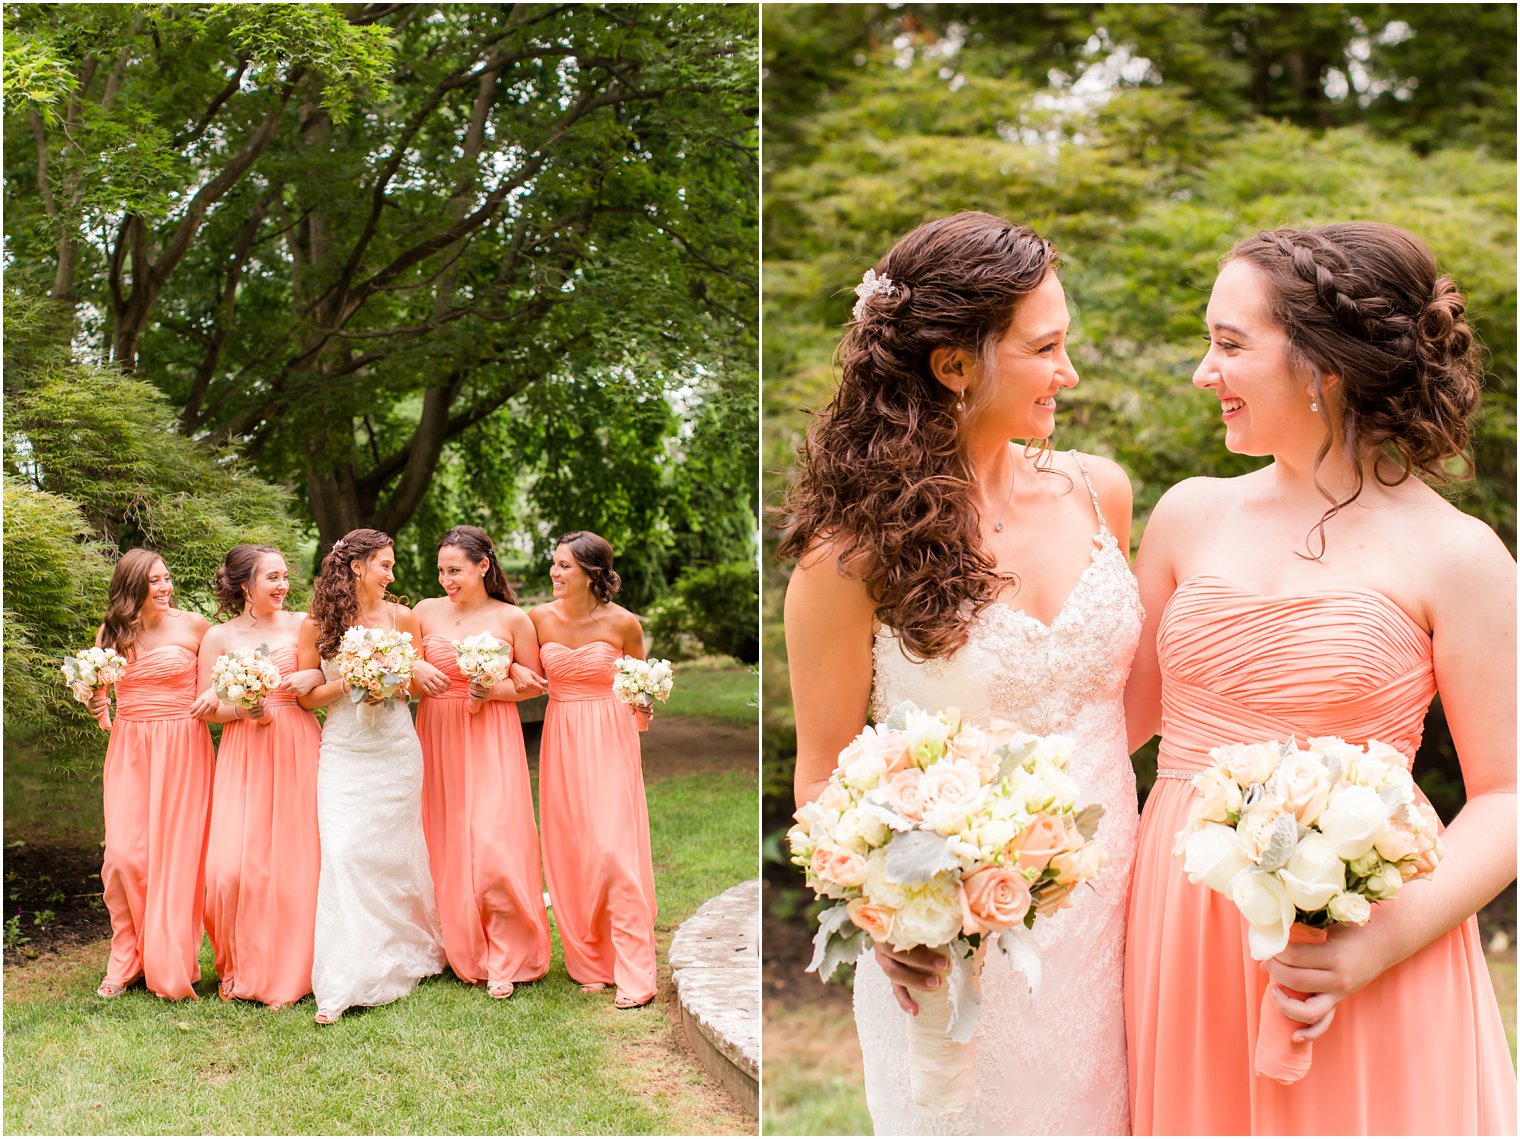 Bridesmaids in peach Donna Morgan dresses